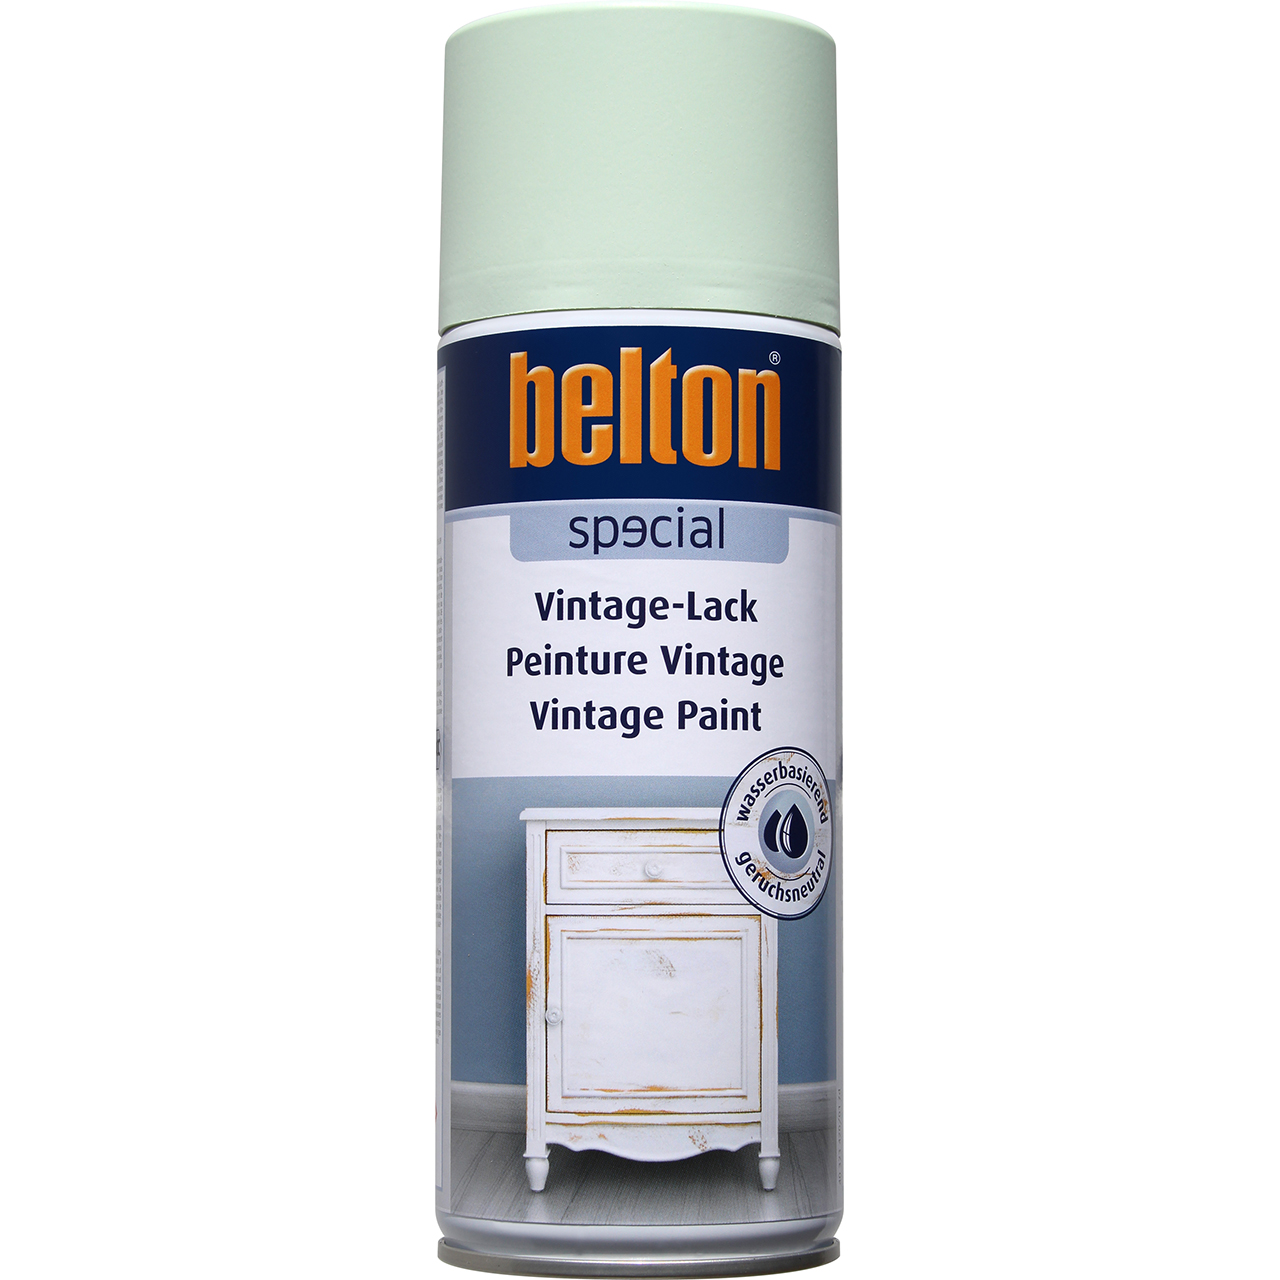 belton Special Vintage-Lack mintgrün, 400ml